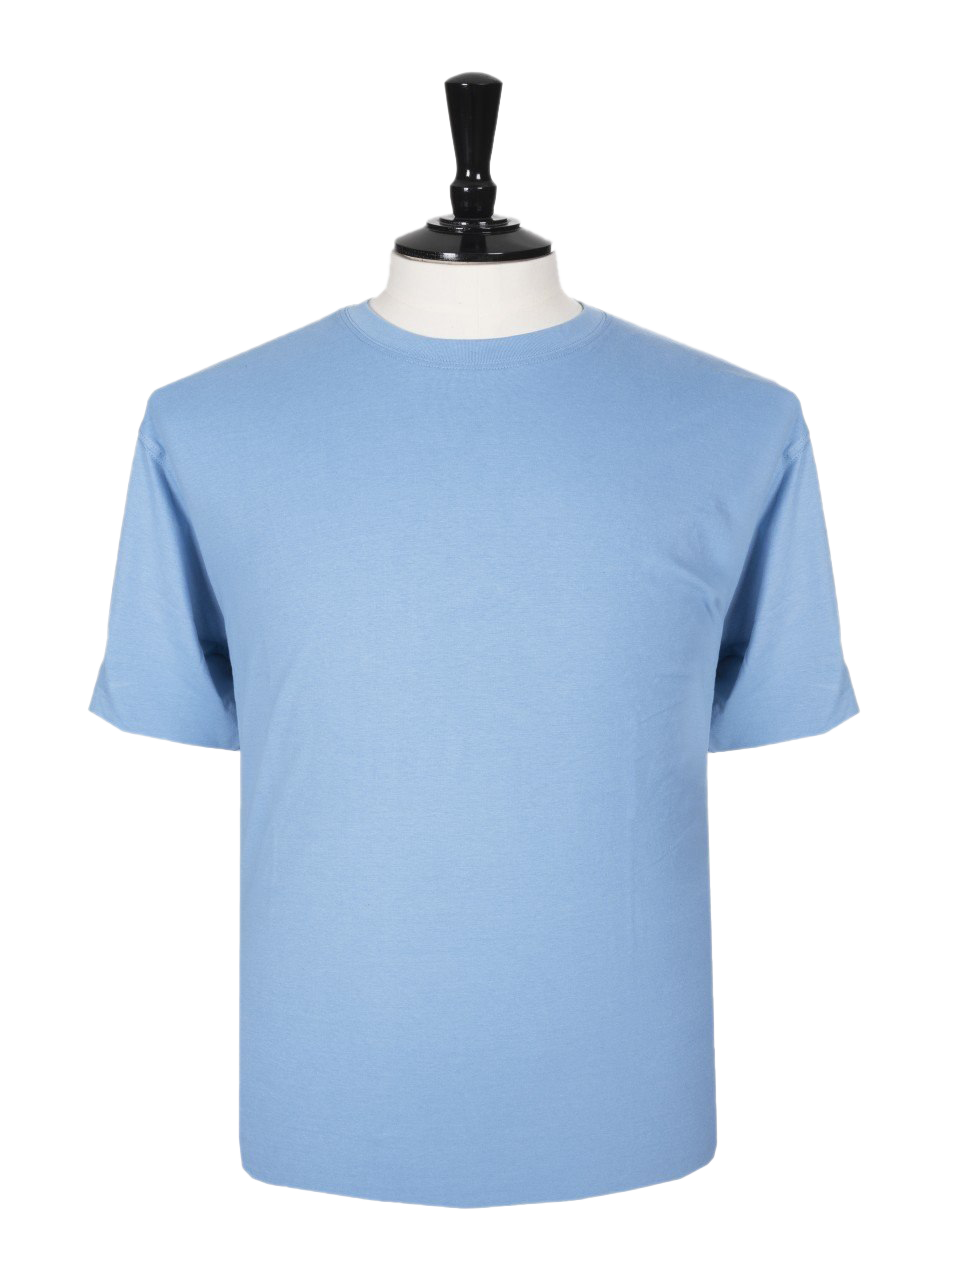 Plain Blue T-Shirt PNG Pic